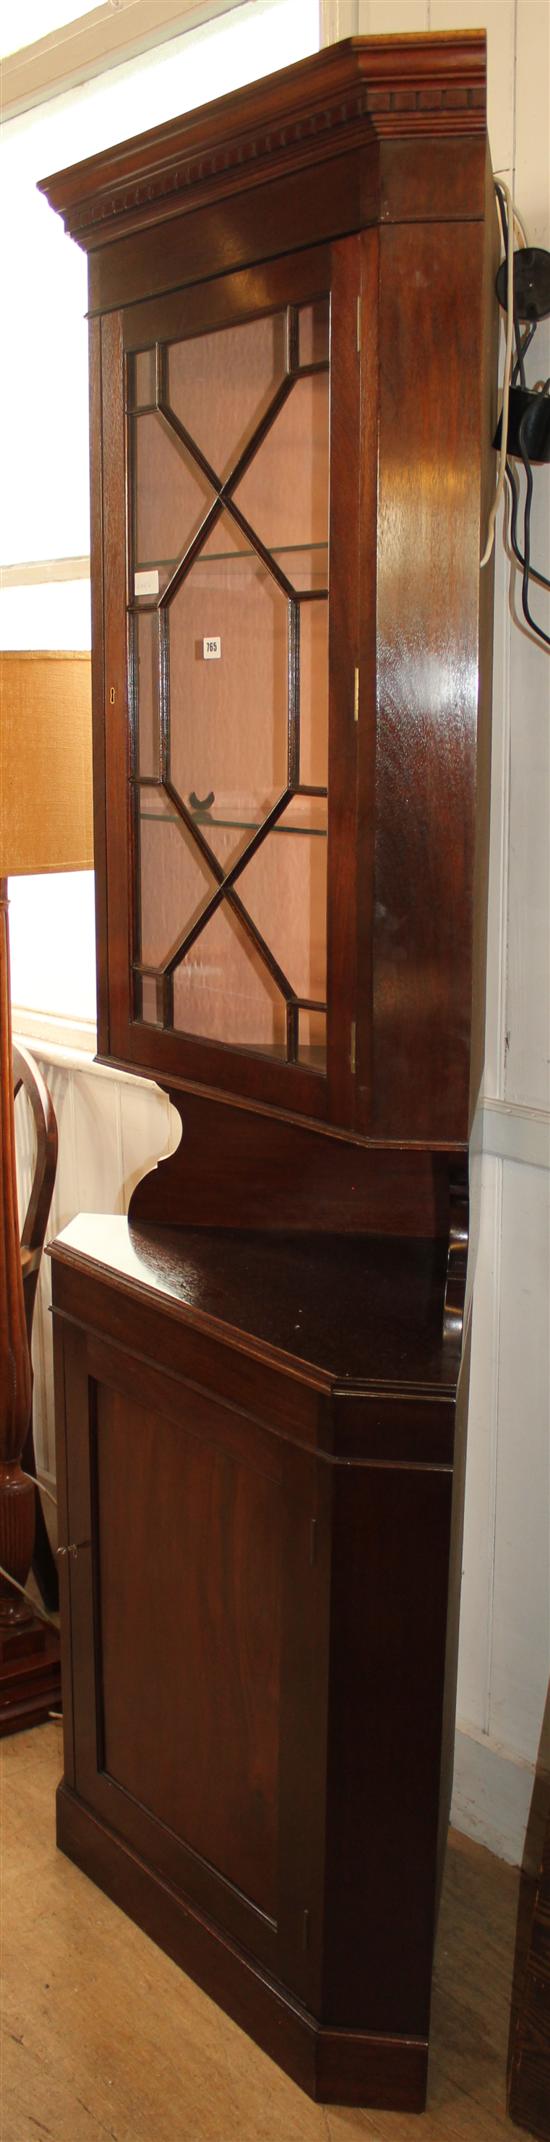 Early 20th century mahogany glazed floor standing corner cabinet